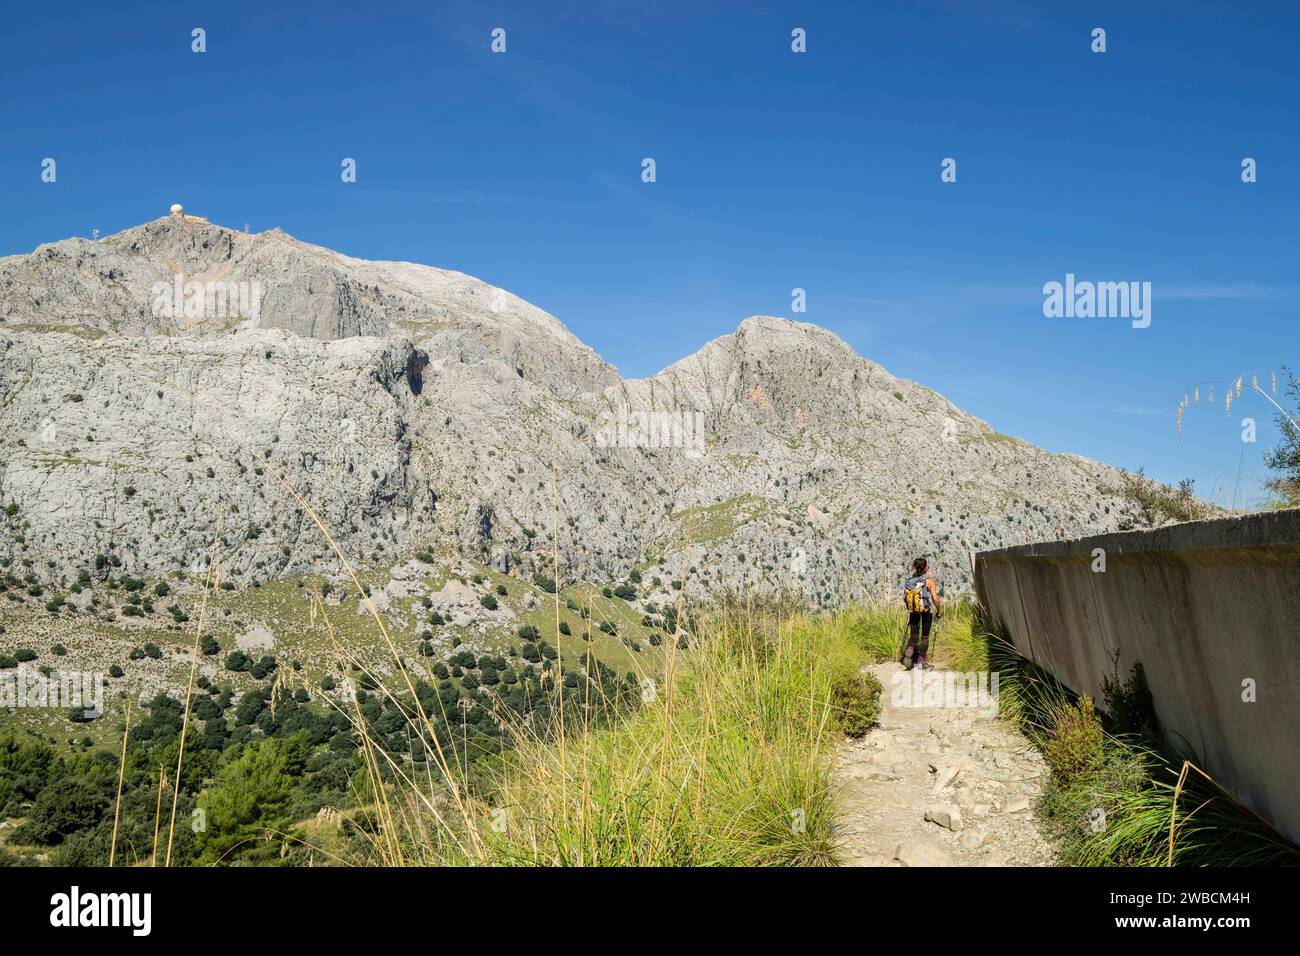 escursionista andando junto a la canal de transvase del Gorg Blau - Cúber, Escorca, Paraje natural de la Serra de Tramuntana, Mallorca, balearic islan Stock Photo